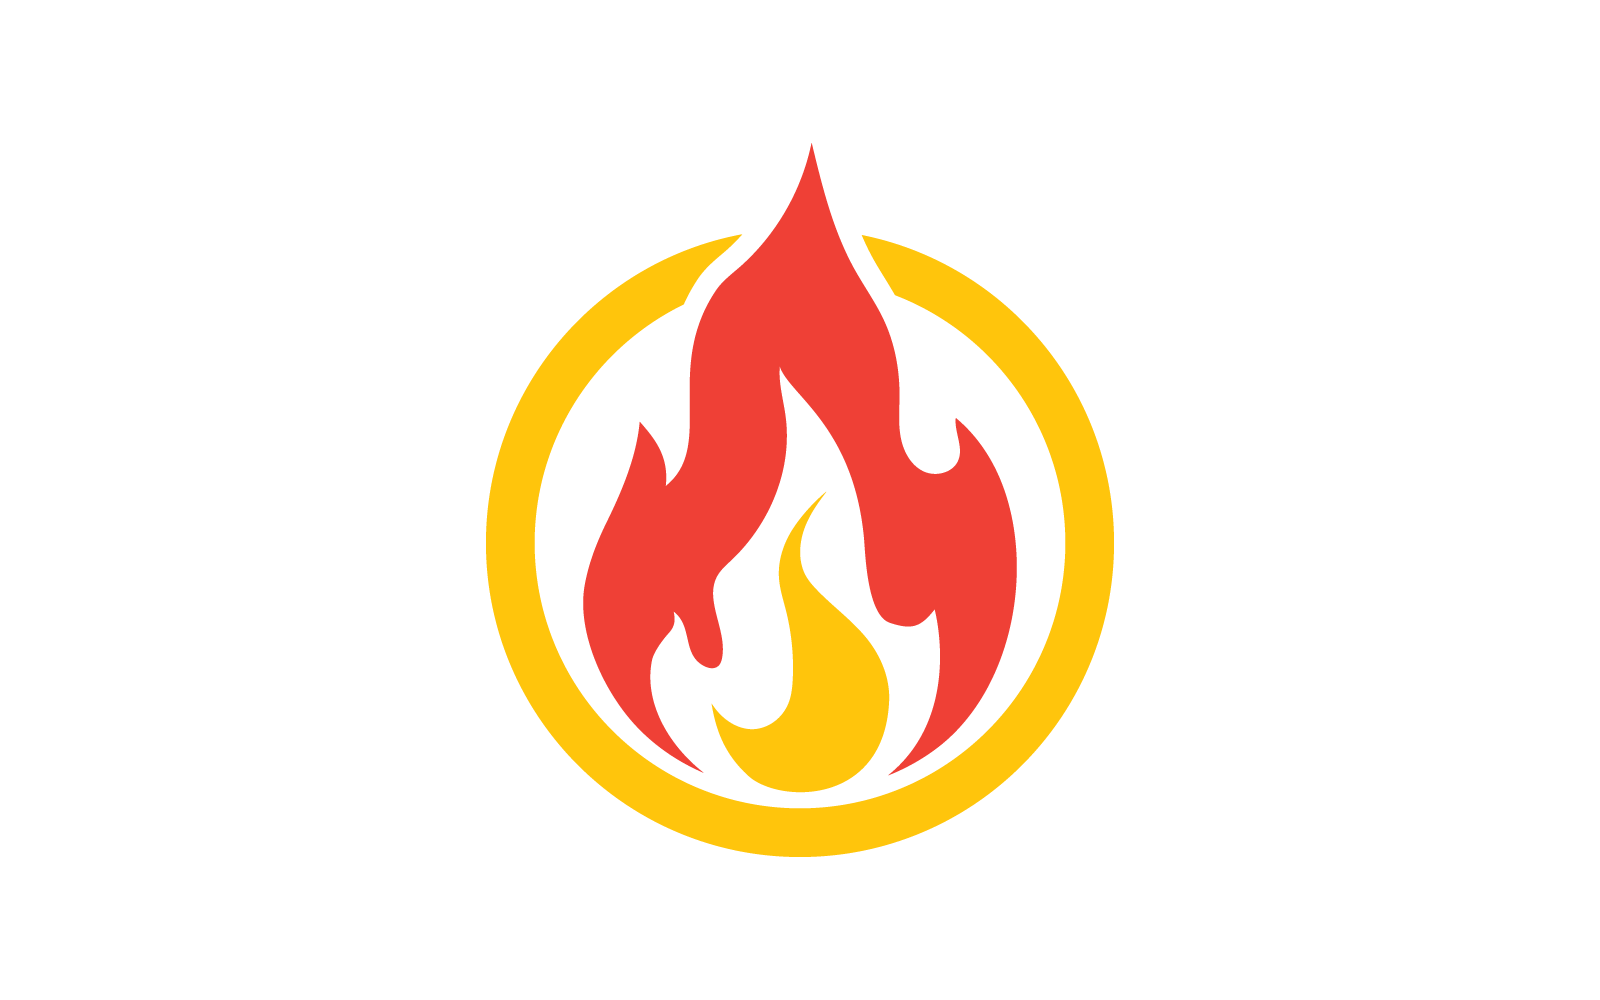 Brand vlam vector, olie, gas en energie logo ontwerpconcept